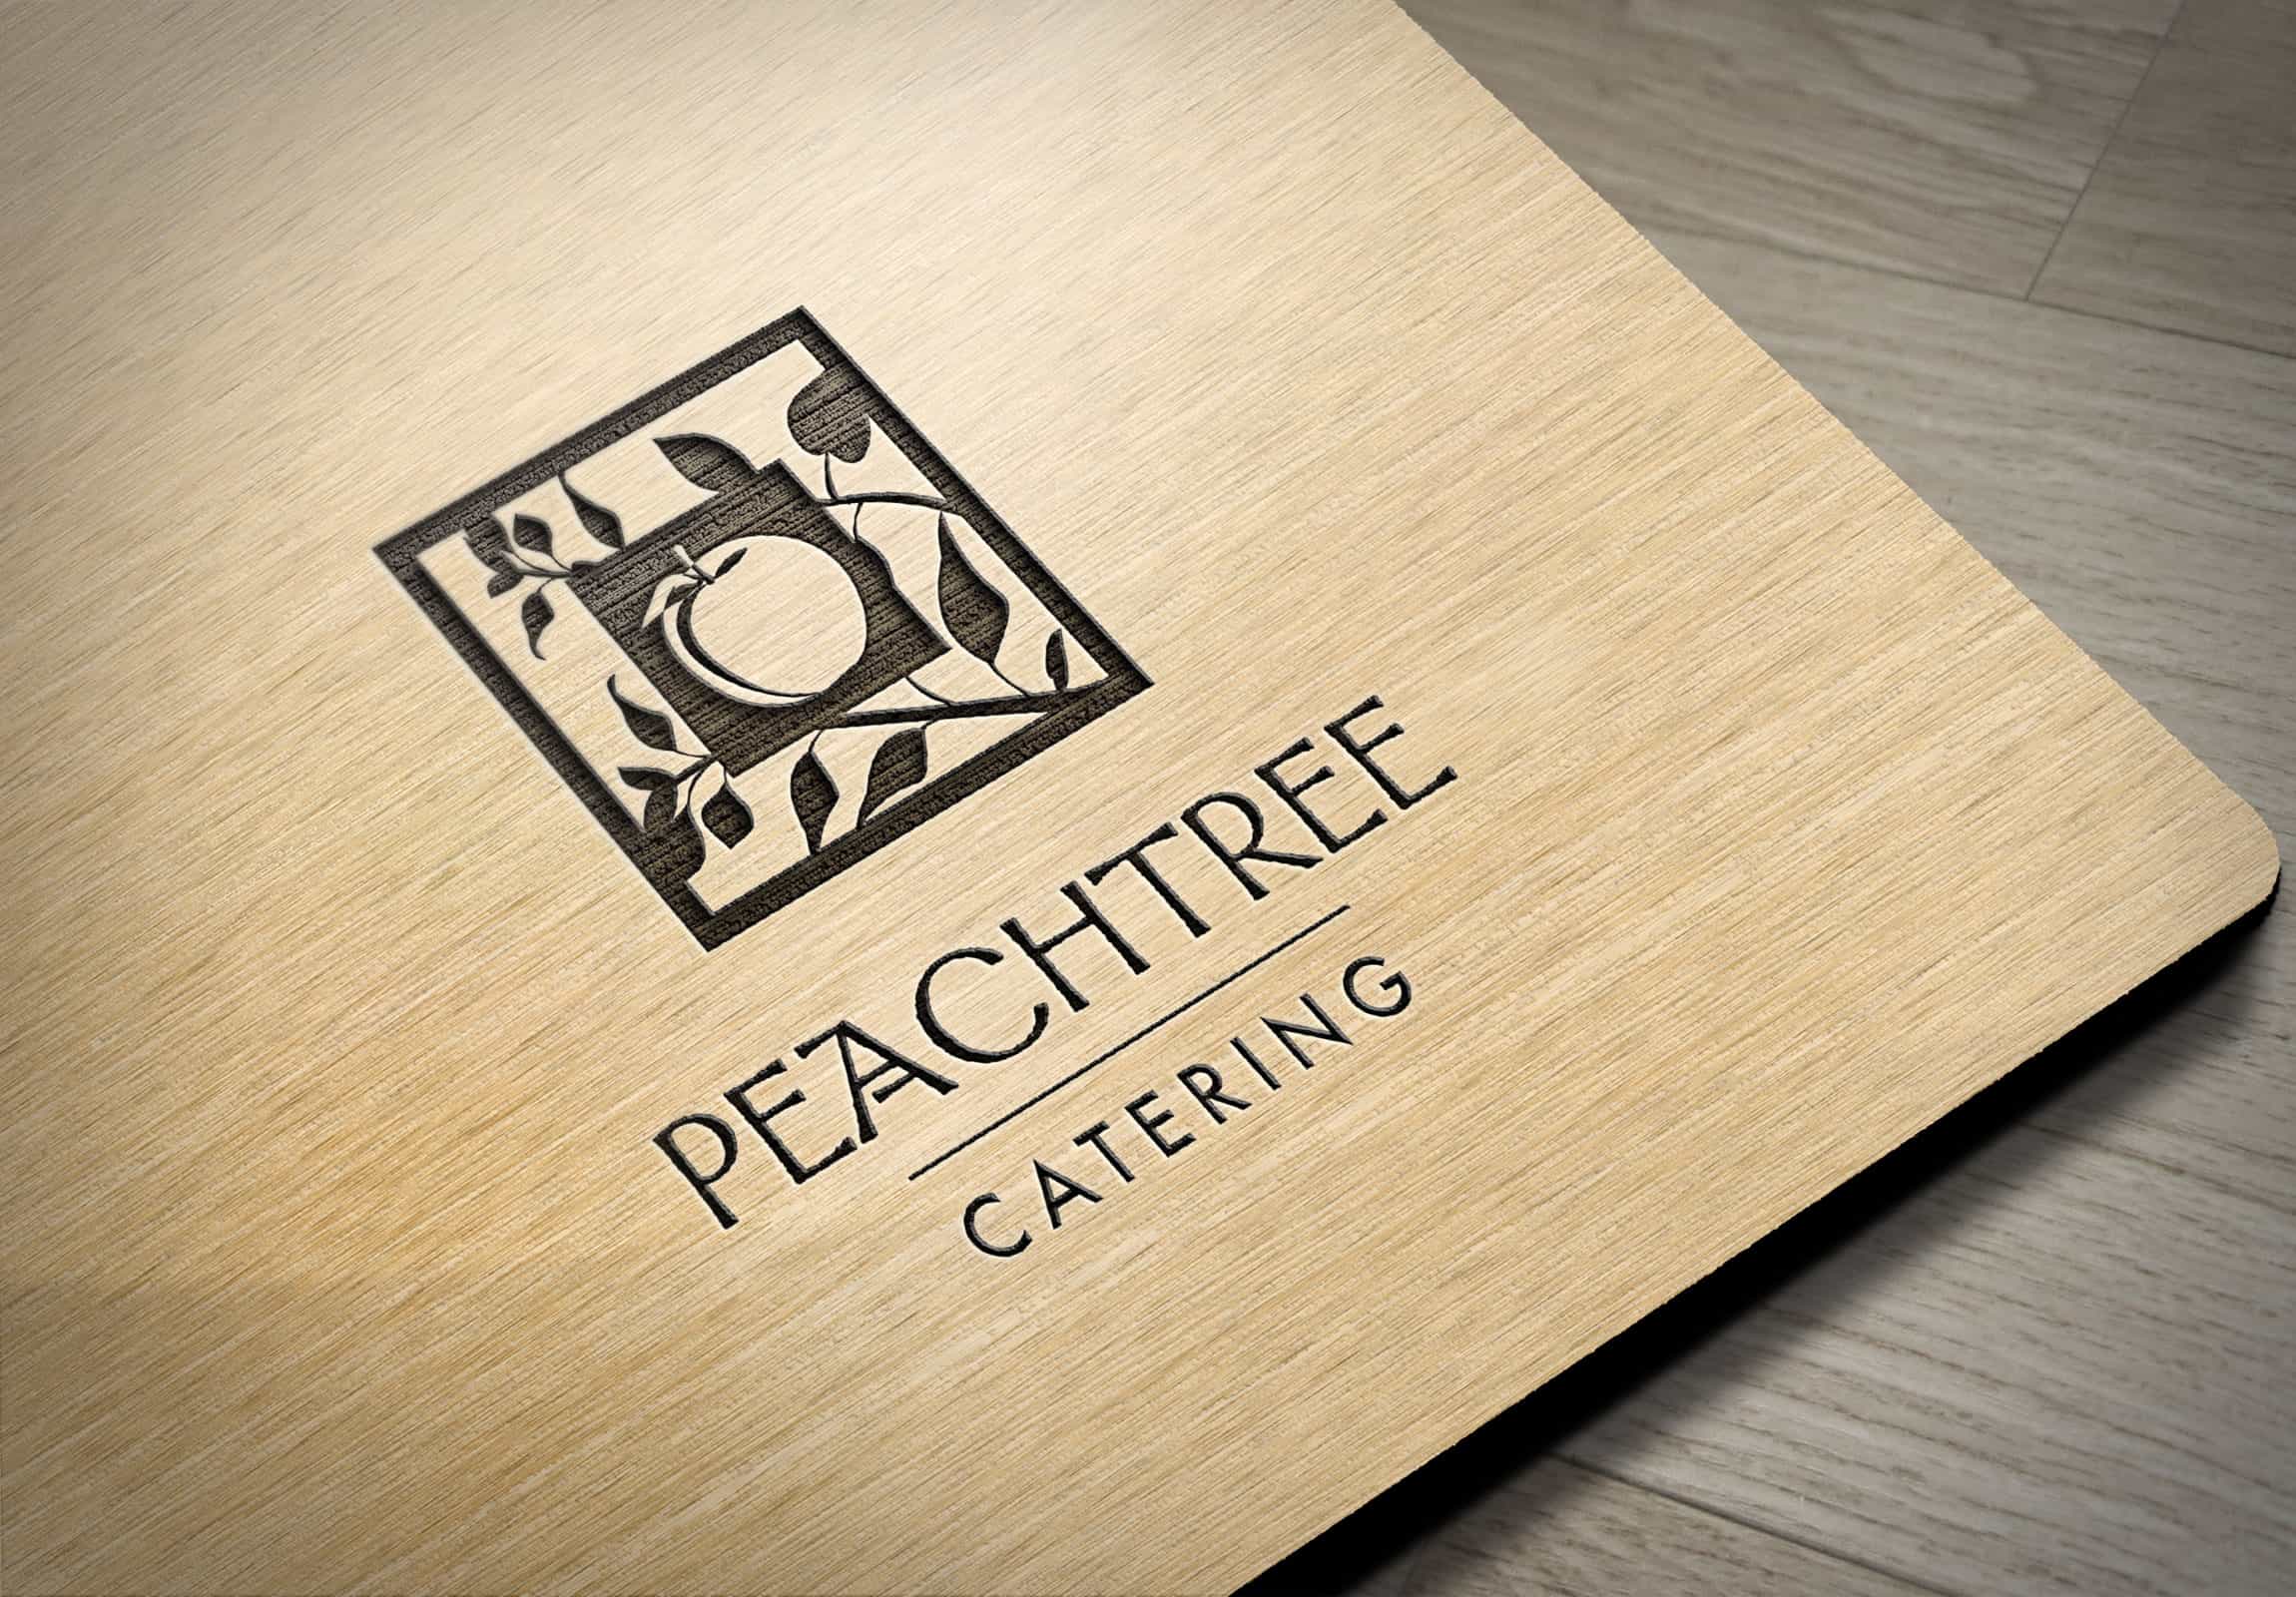 Peachtree Catering - Branding & Marketing